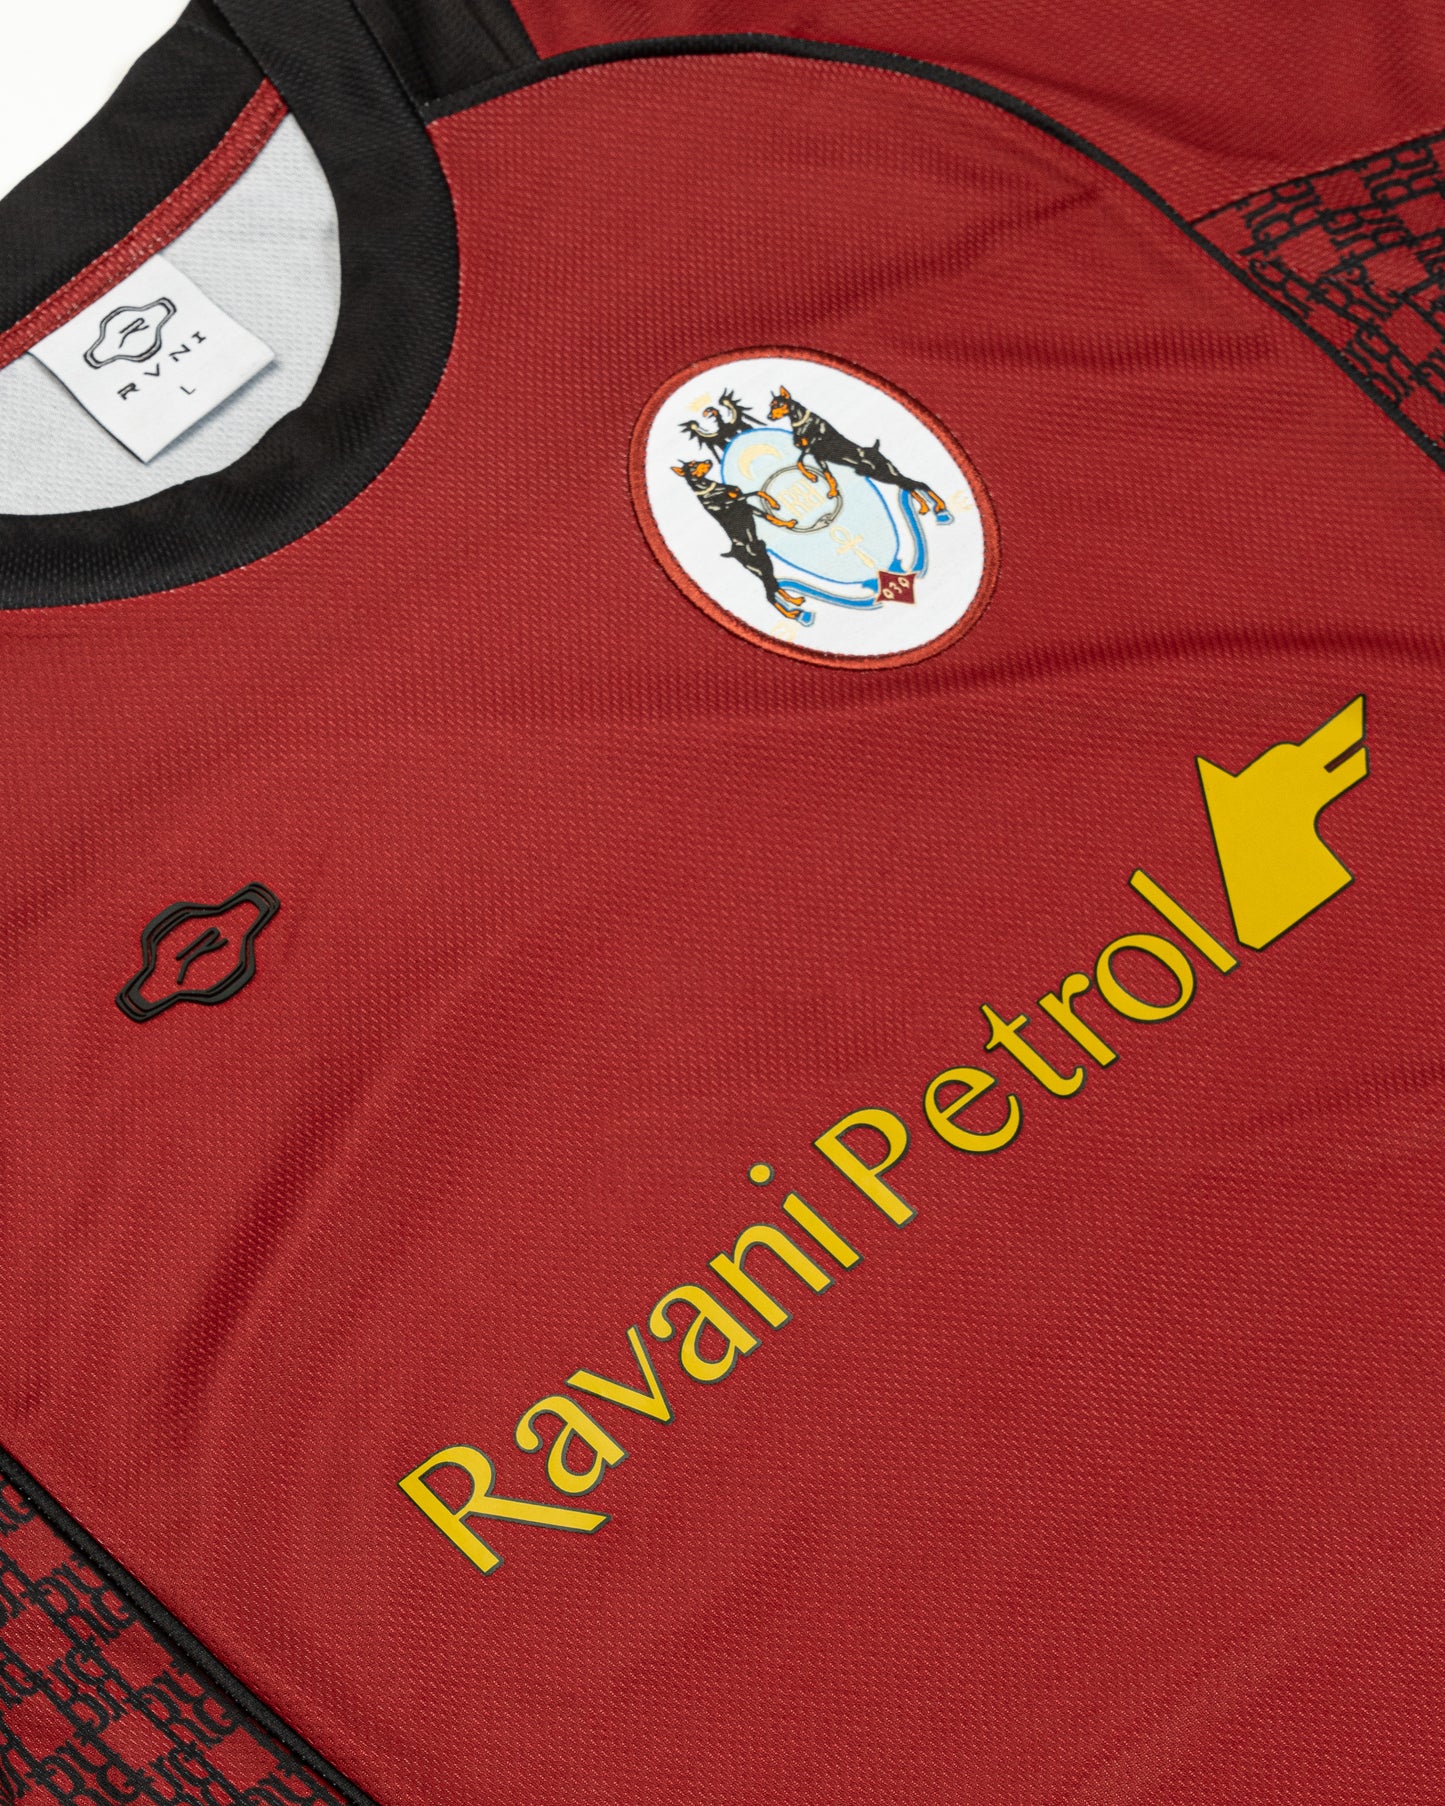 FC Ravani 7 Years Jersey Bordeuax